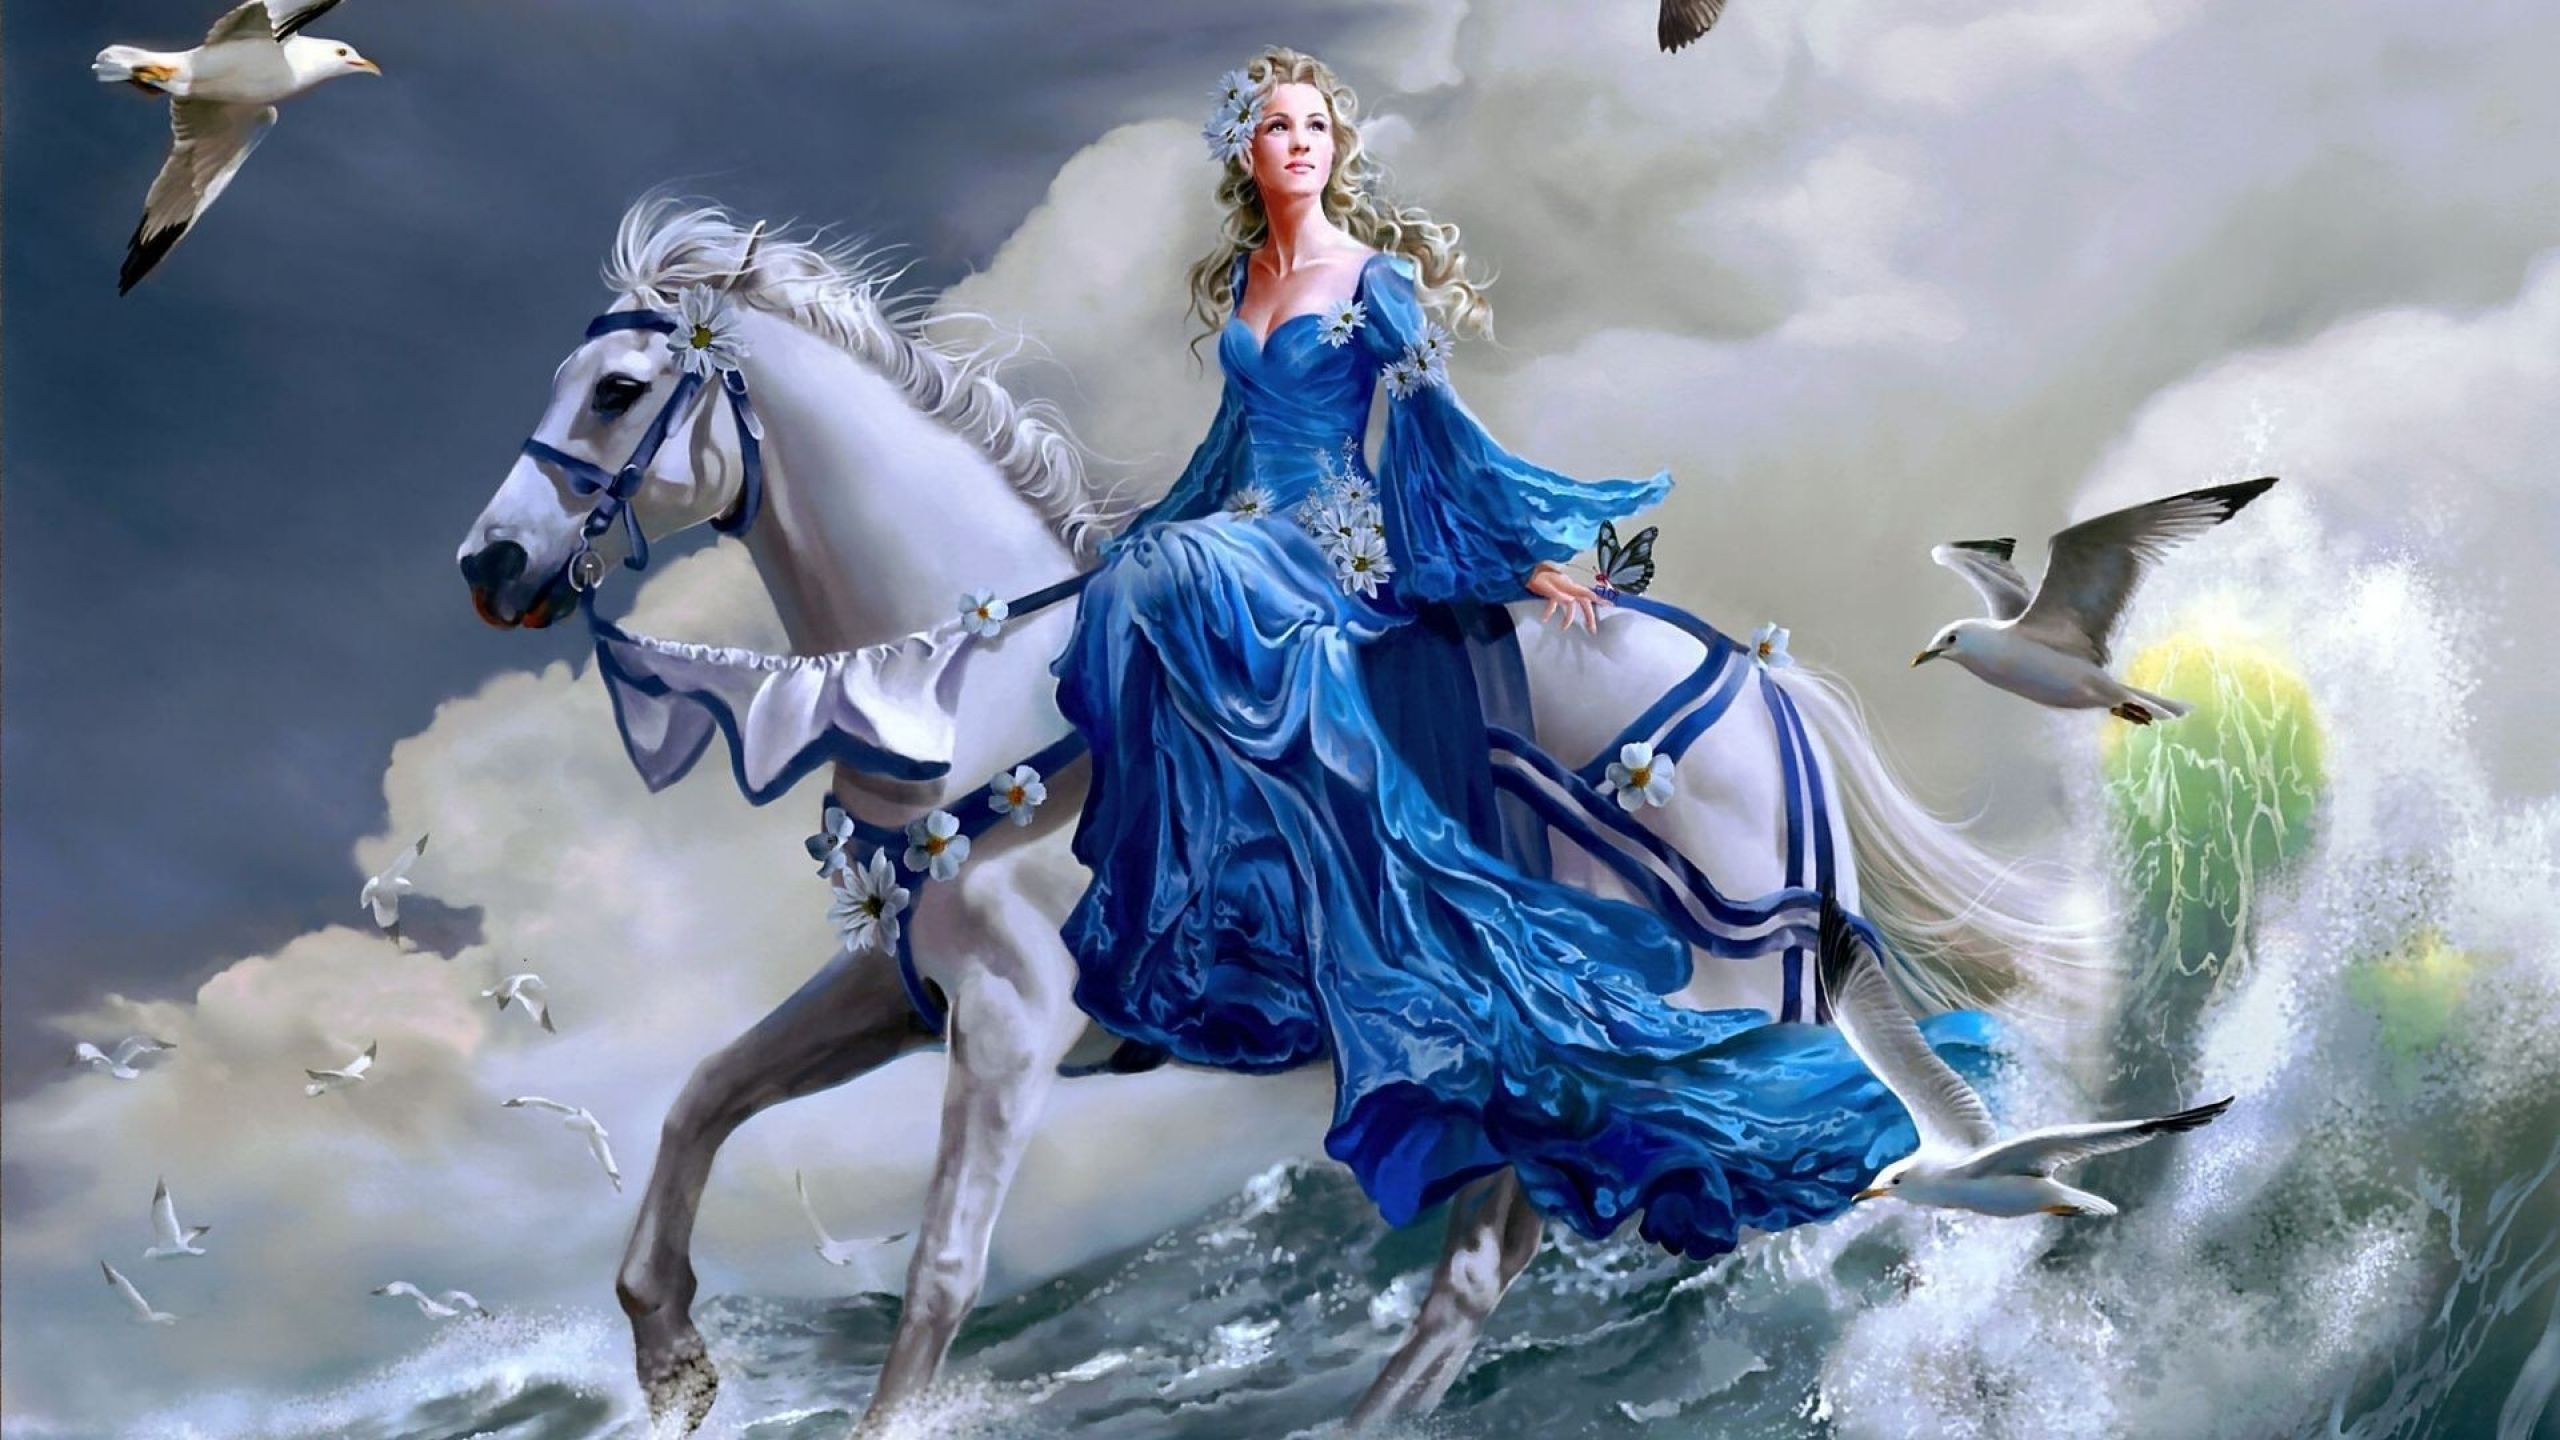 Girl Riding A Horse On Water 2560x1440 Fantasy Wallpaper 28685, Wallpaper13.com